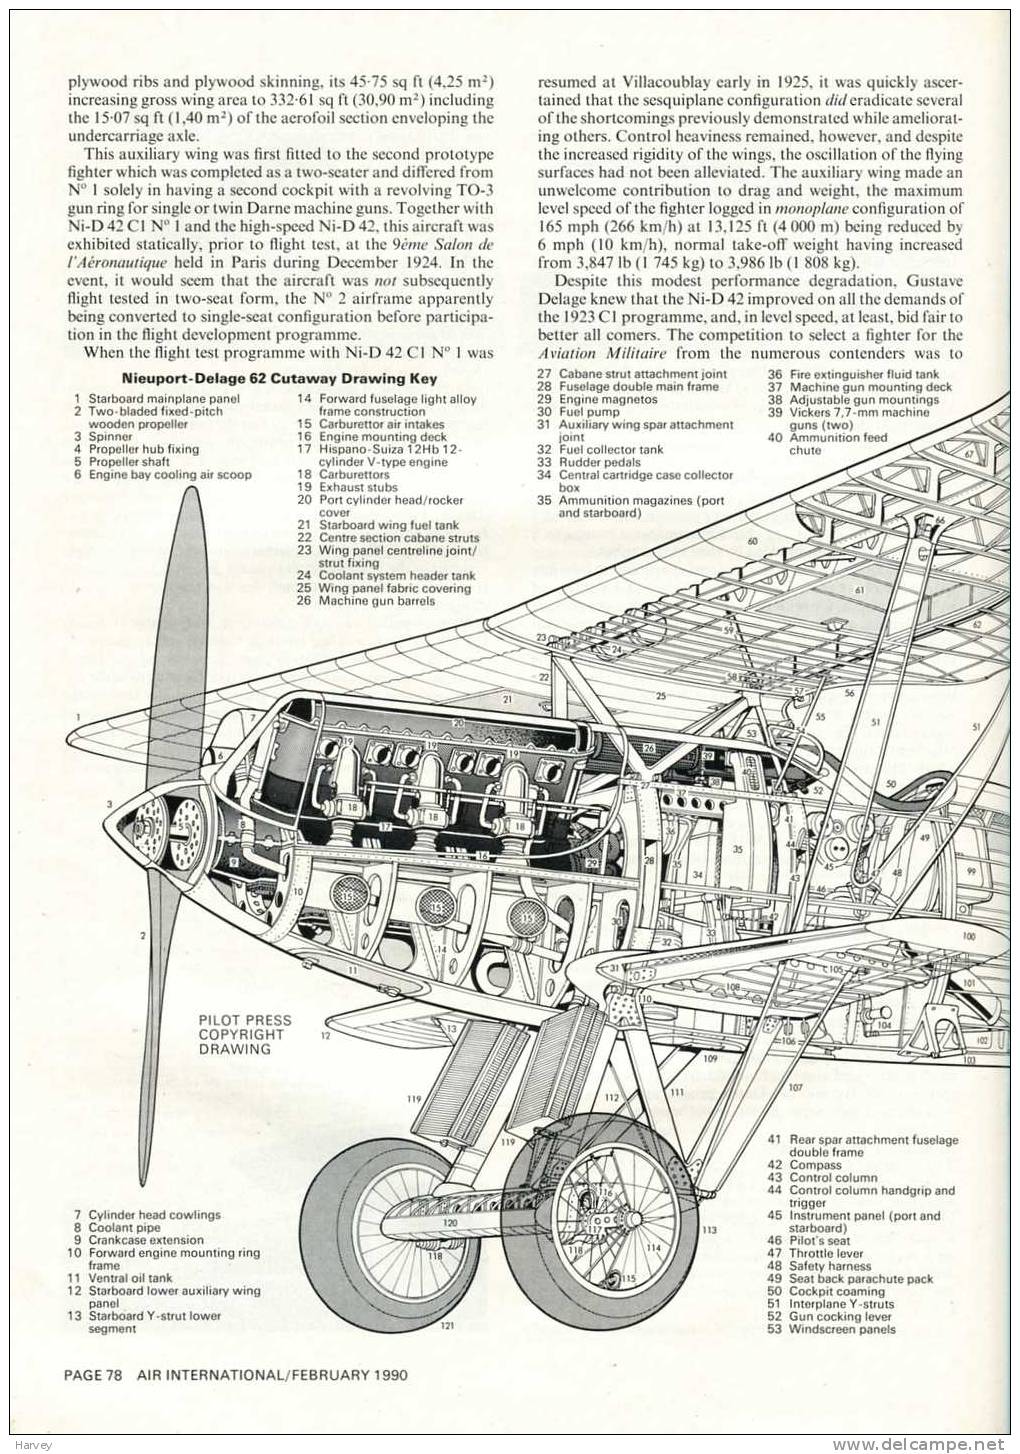 Air International Vol 38 N° 2 February 1990 - Transportation